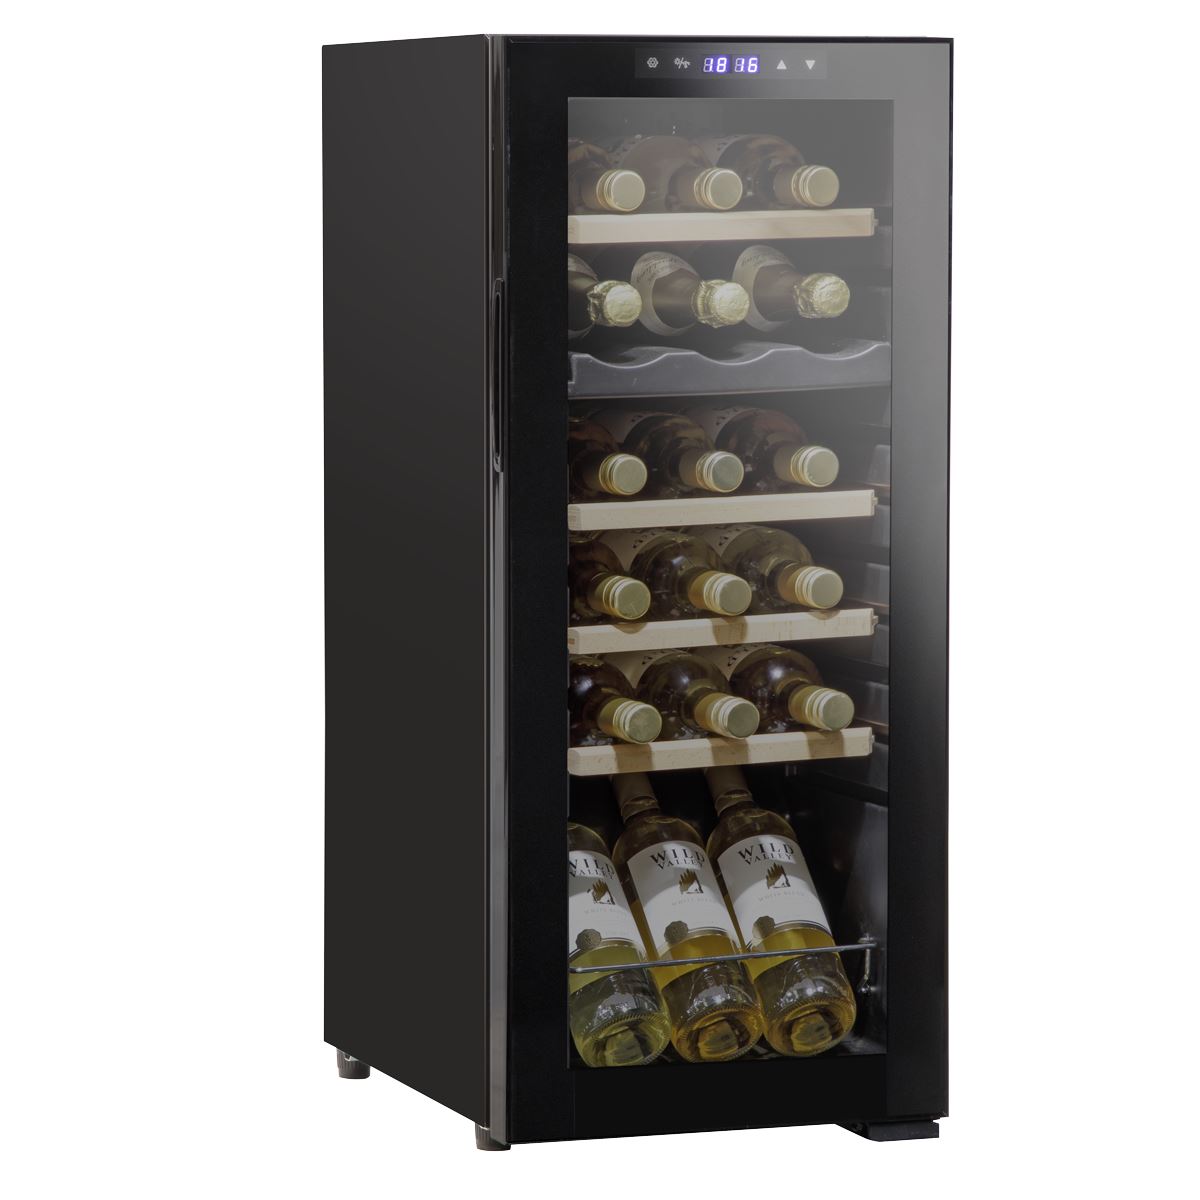 Baridi 18 Bottle Dual Zone Wine Cooler, Fridge with Digital Touchscreen Controls, Wooden Shelves & LED Light, Black